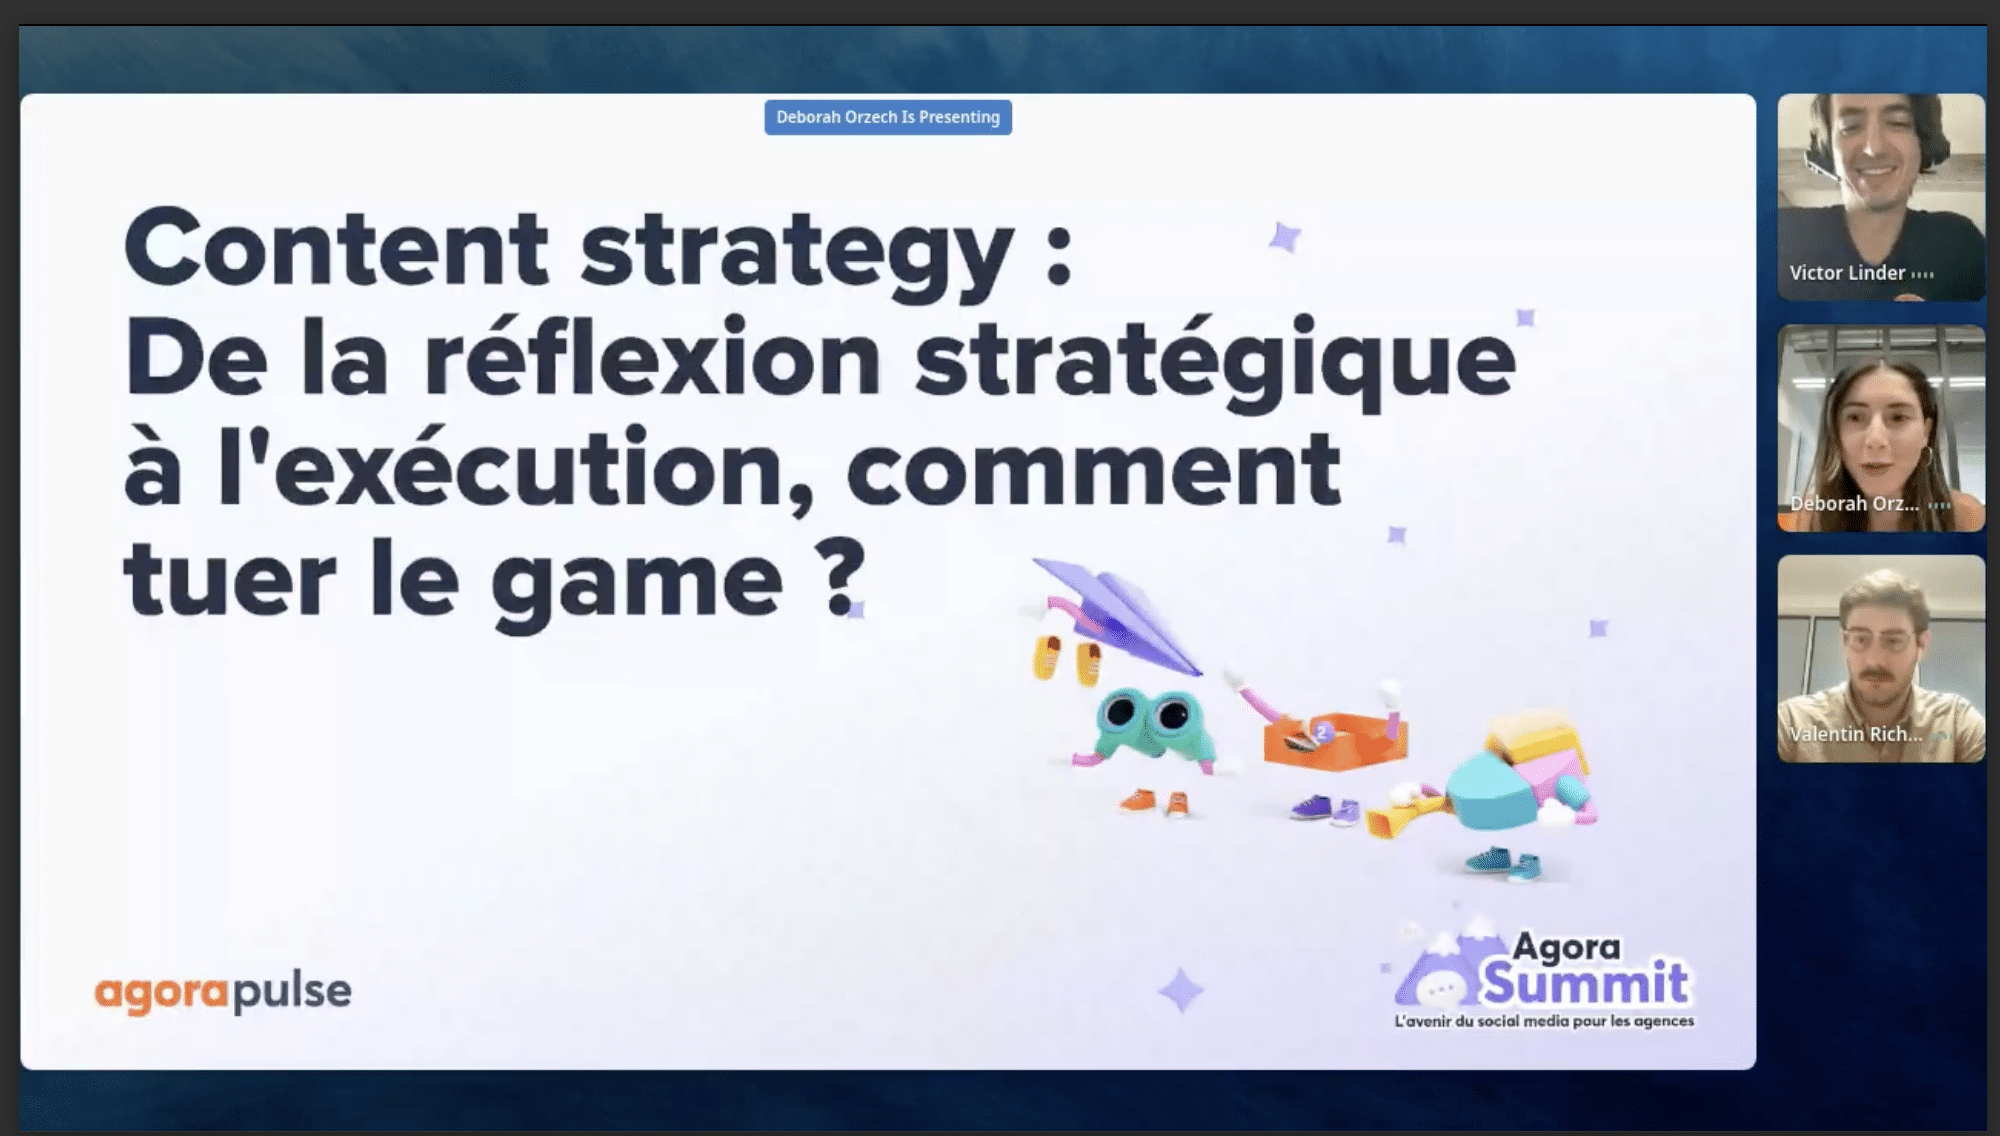 Agora Summit - Content strategy - conseils d’expert pour tuer le game